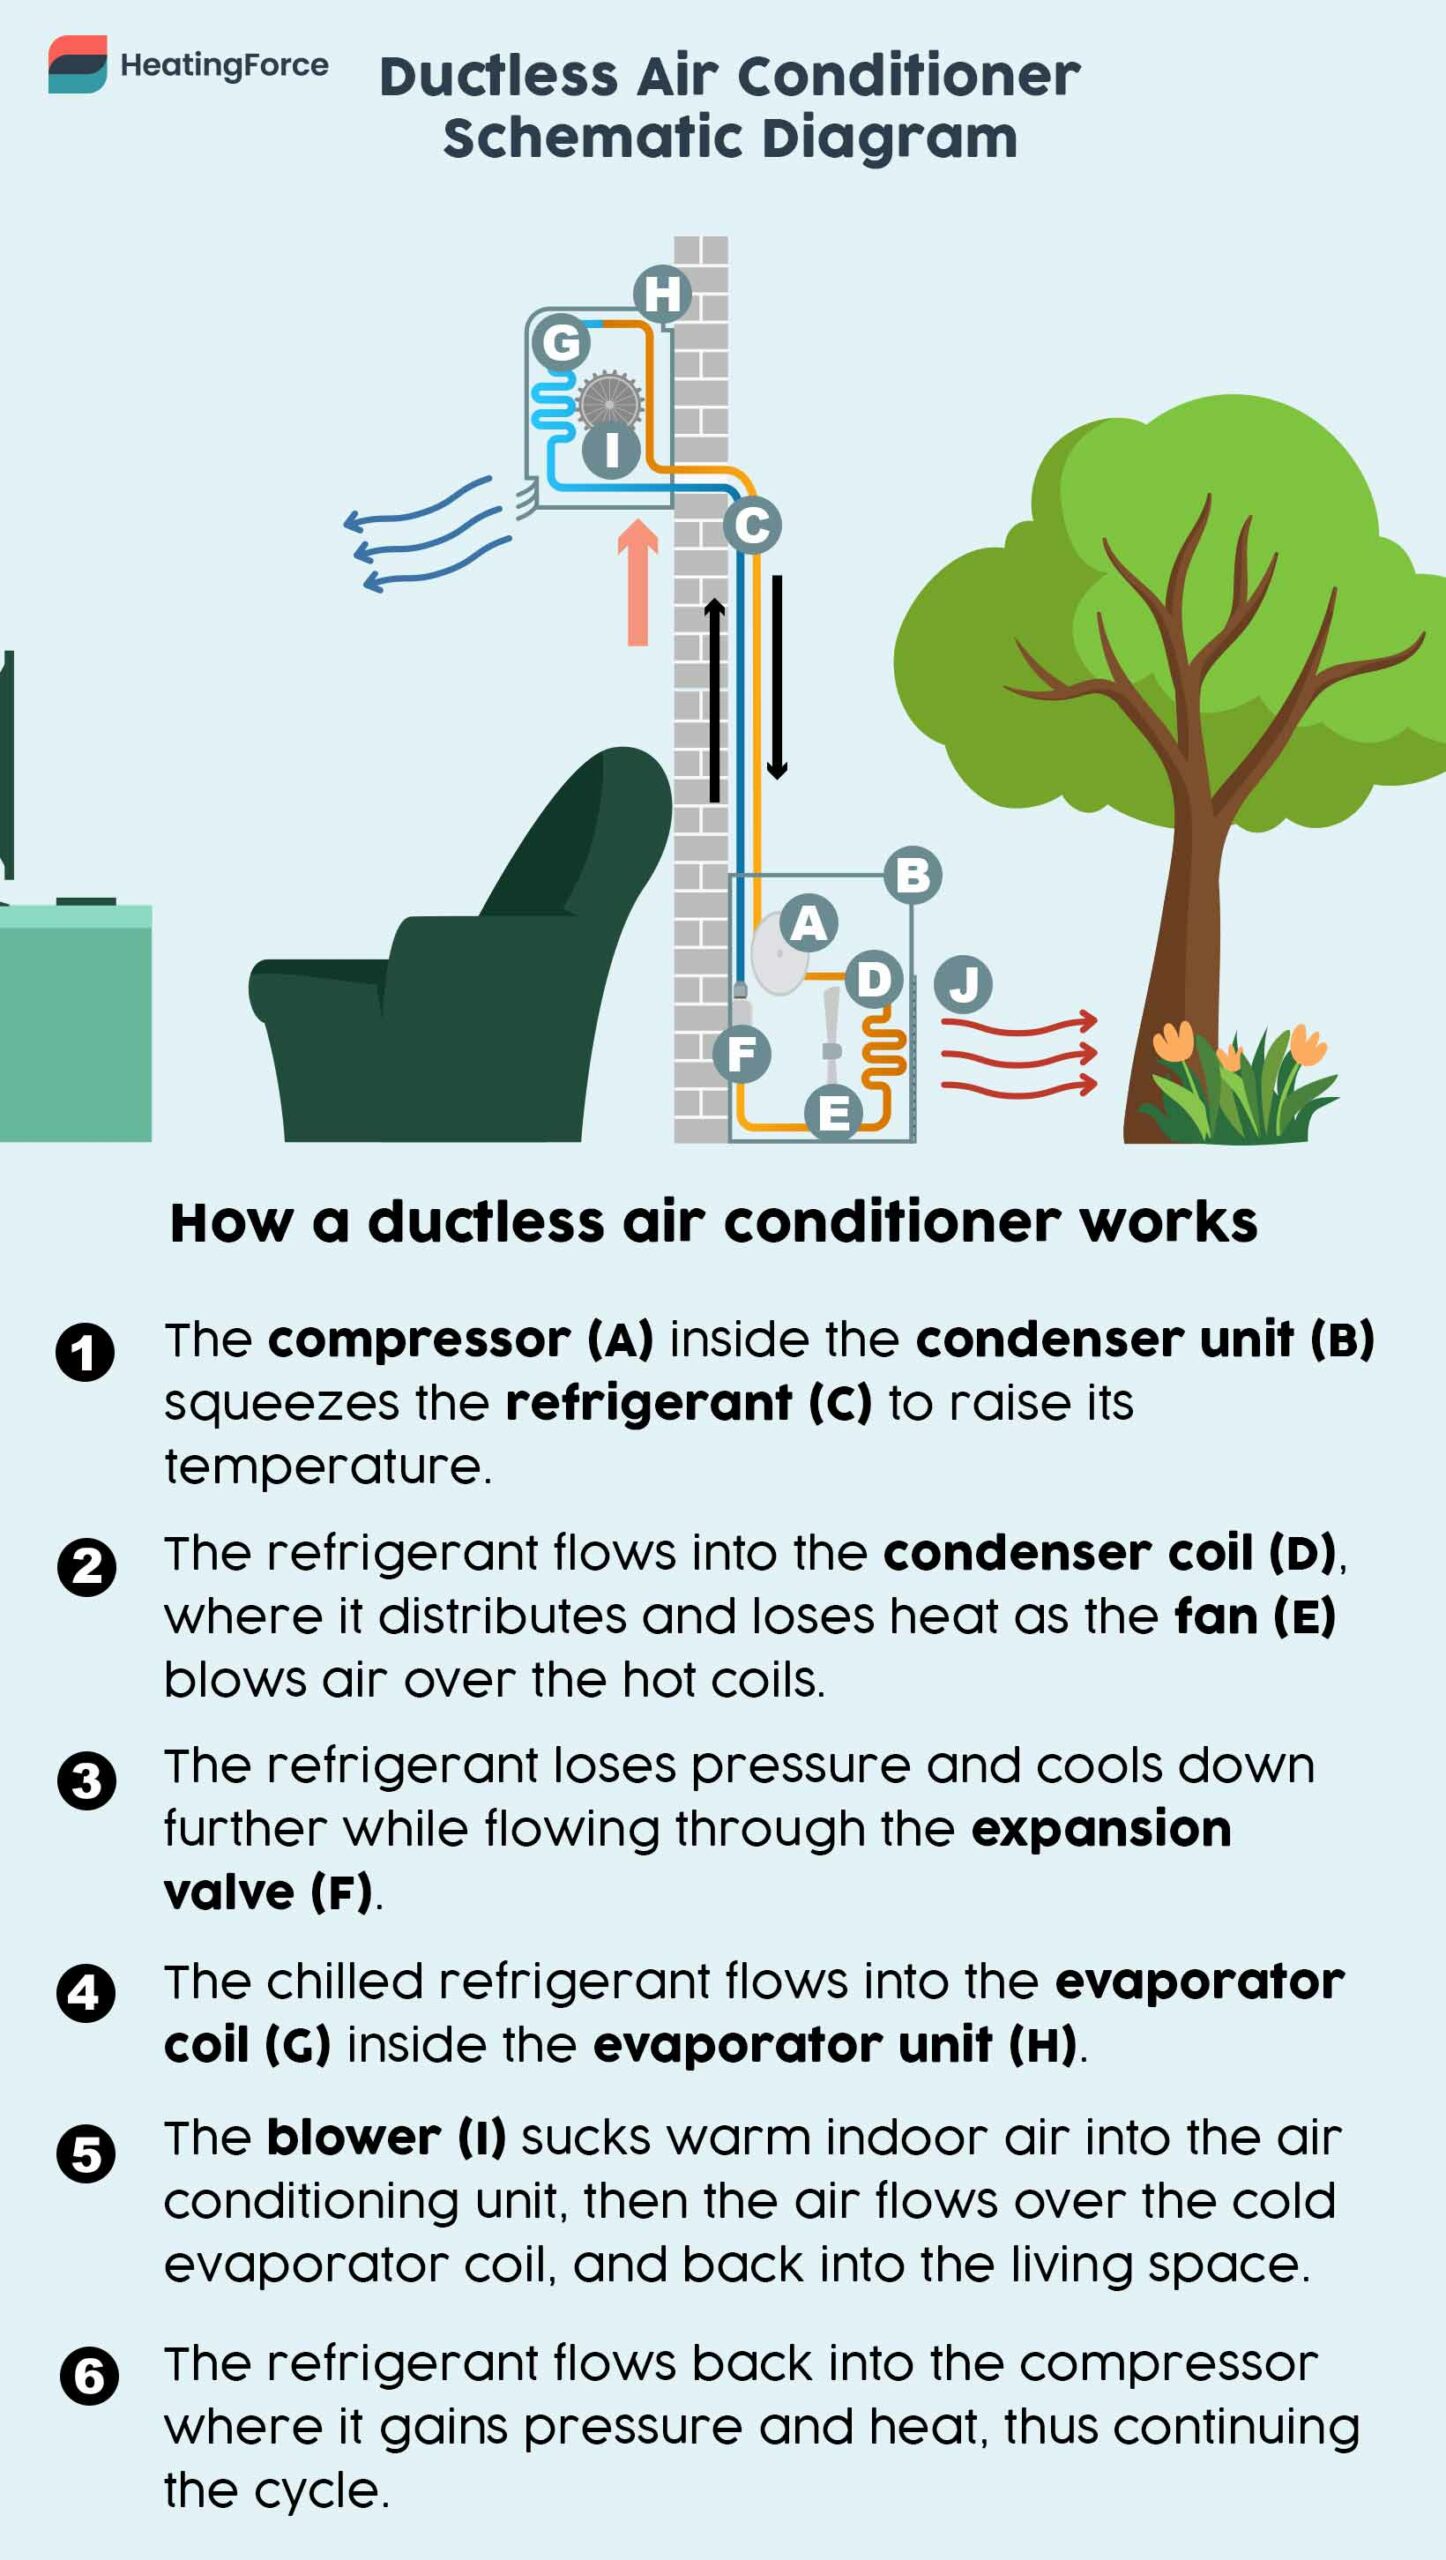 Ductless air conditioner diagram